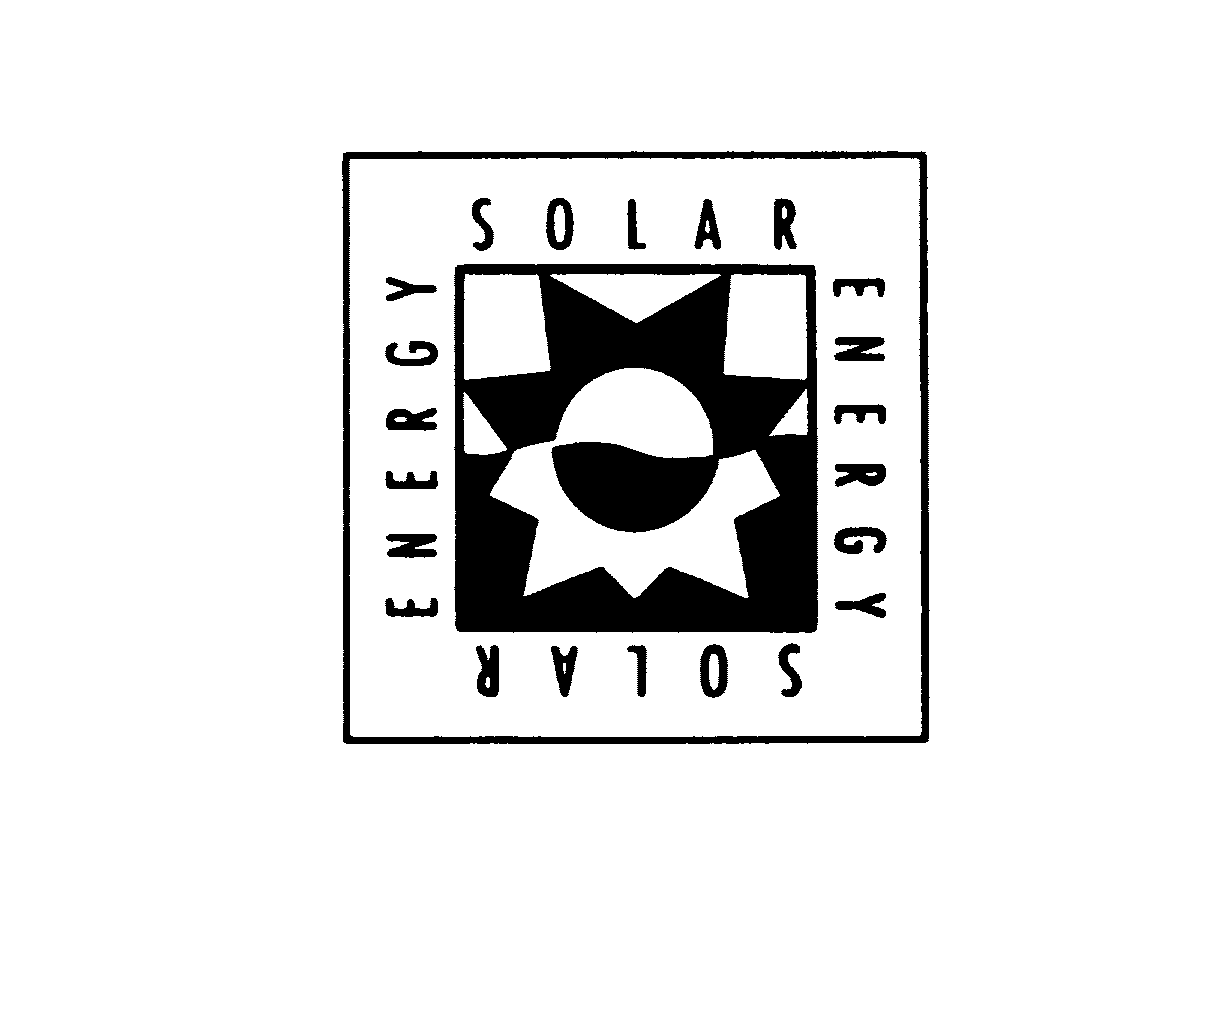  SOLAR ENERGY